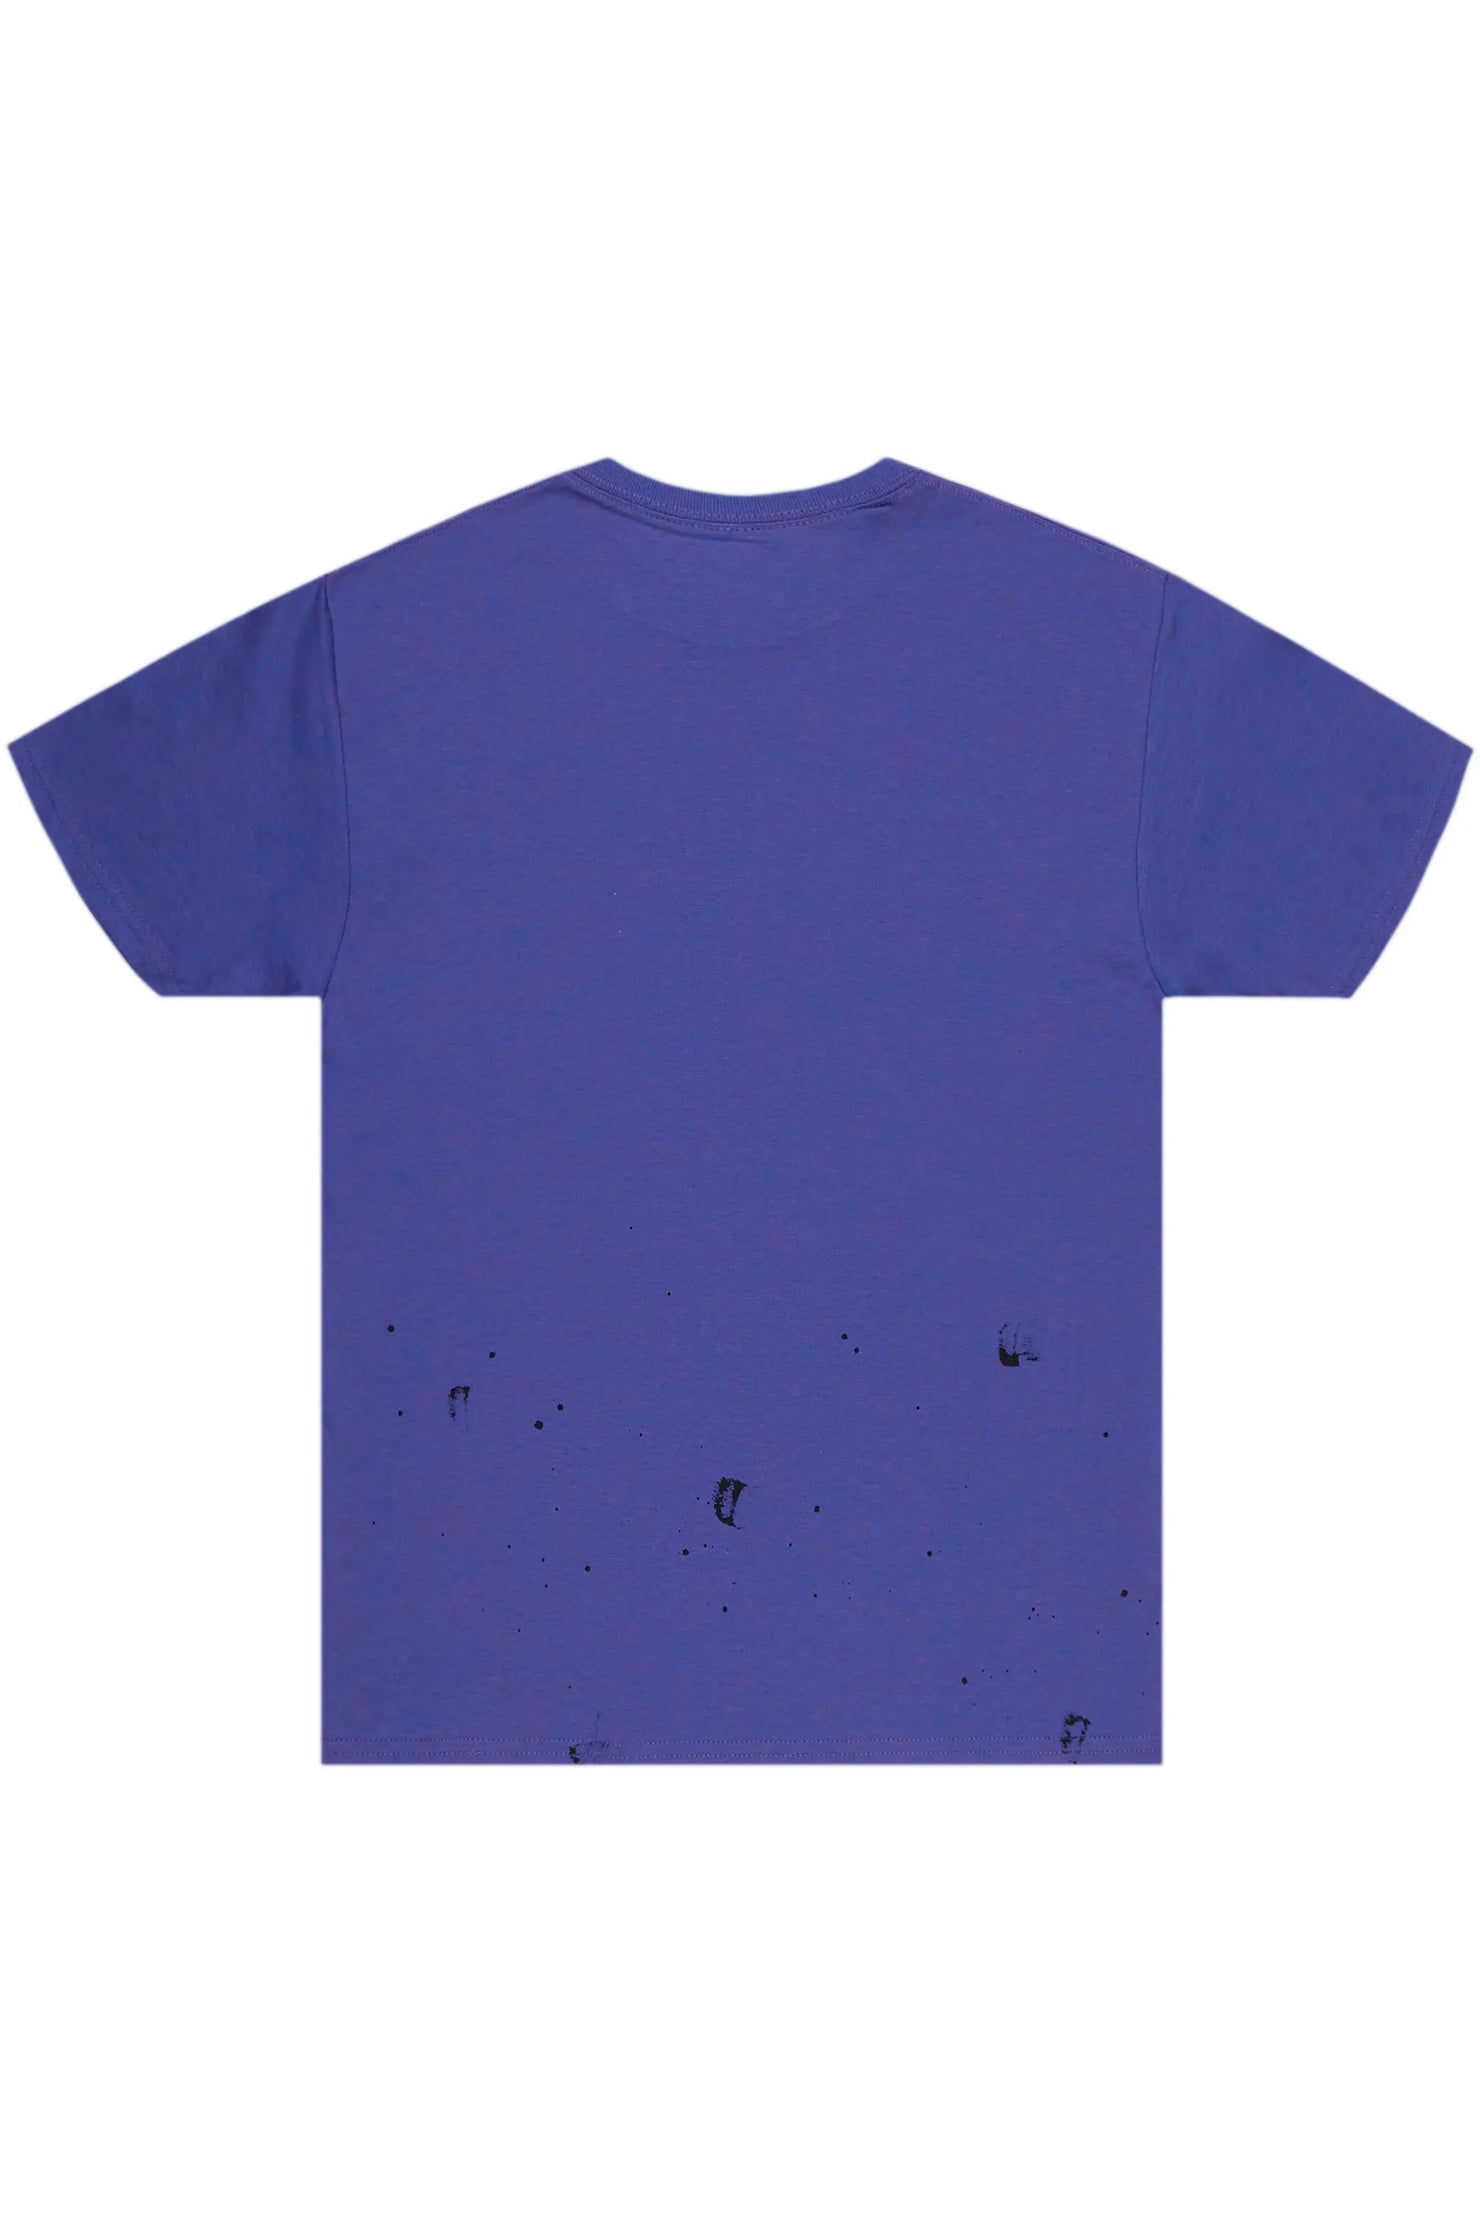 Raffer Purple Graphic T-Shirt